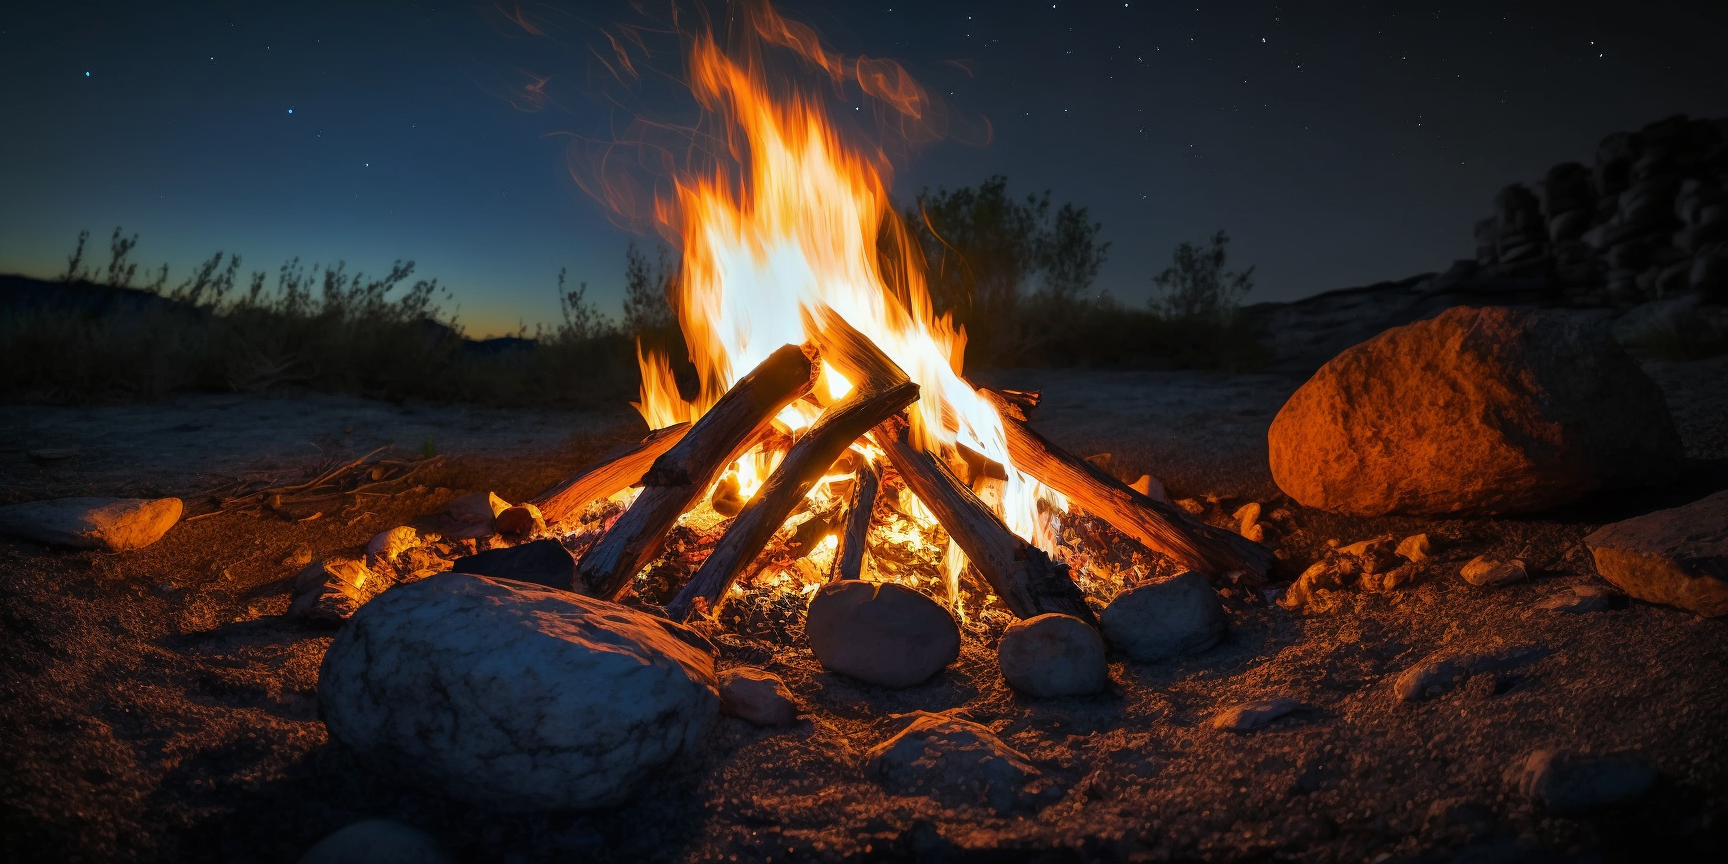 Starting a Campfire